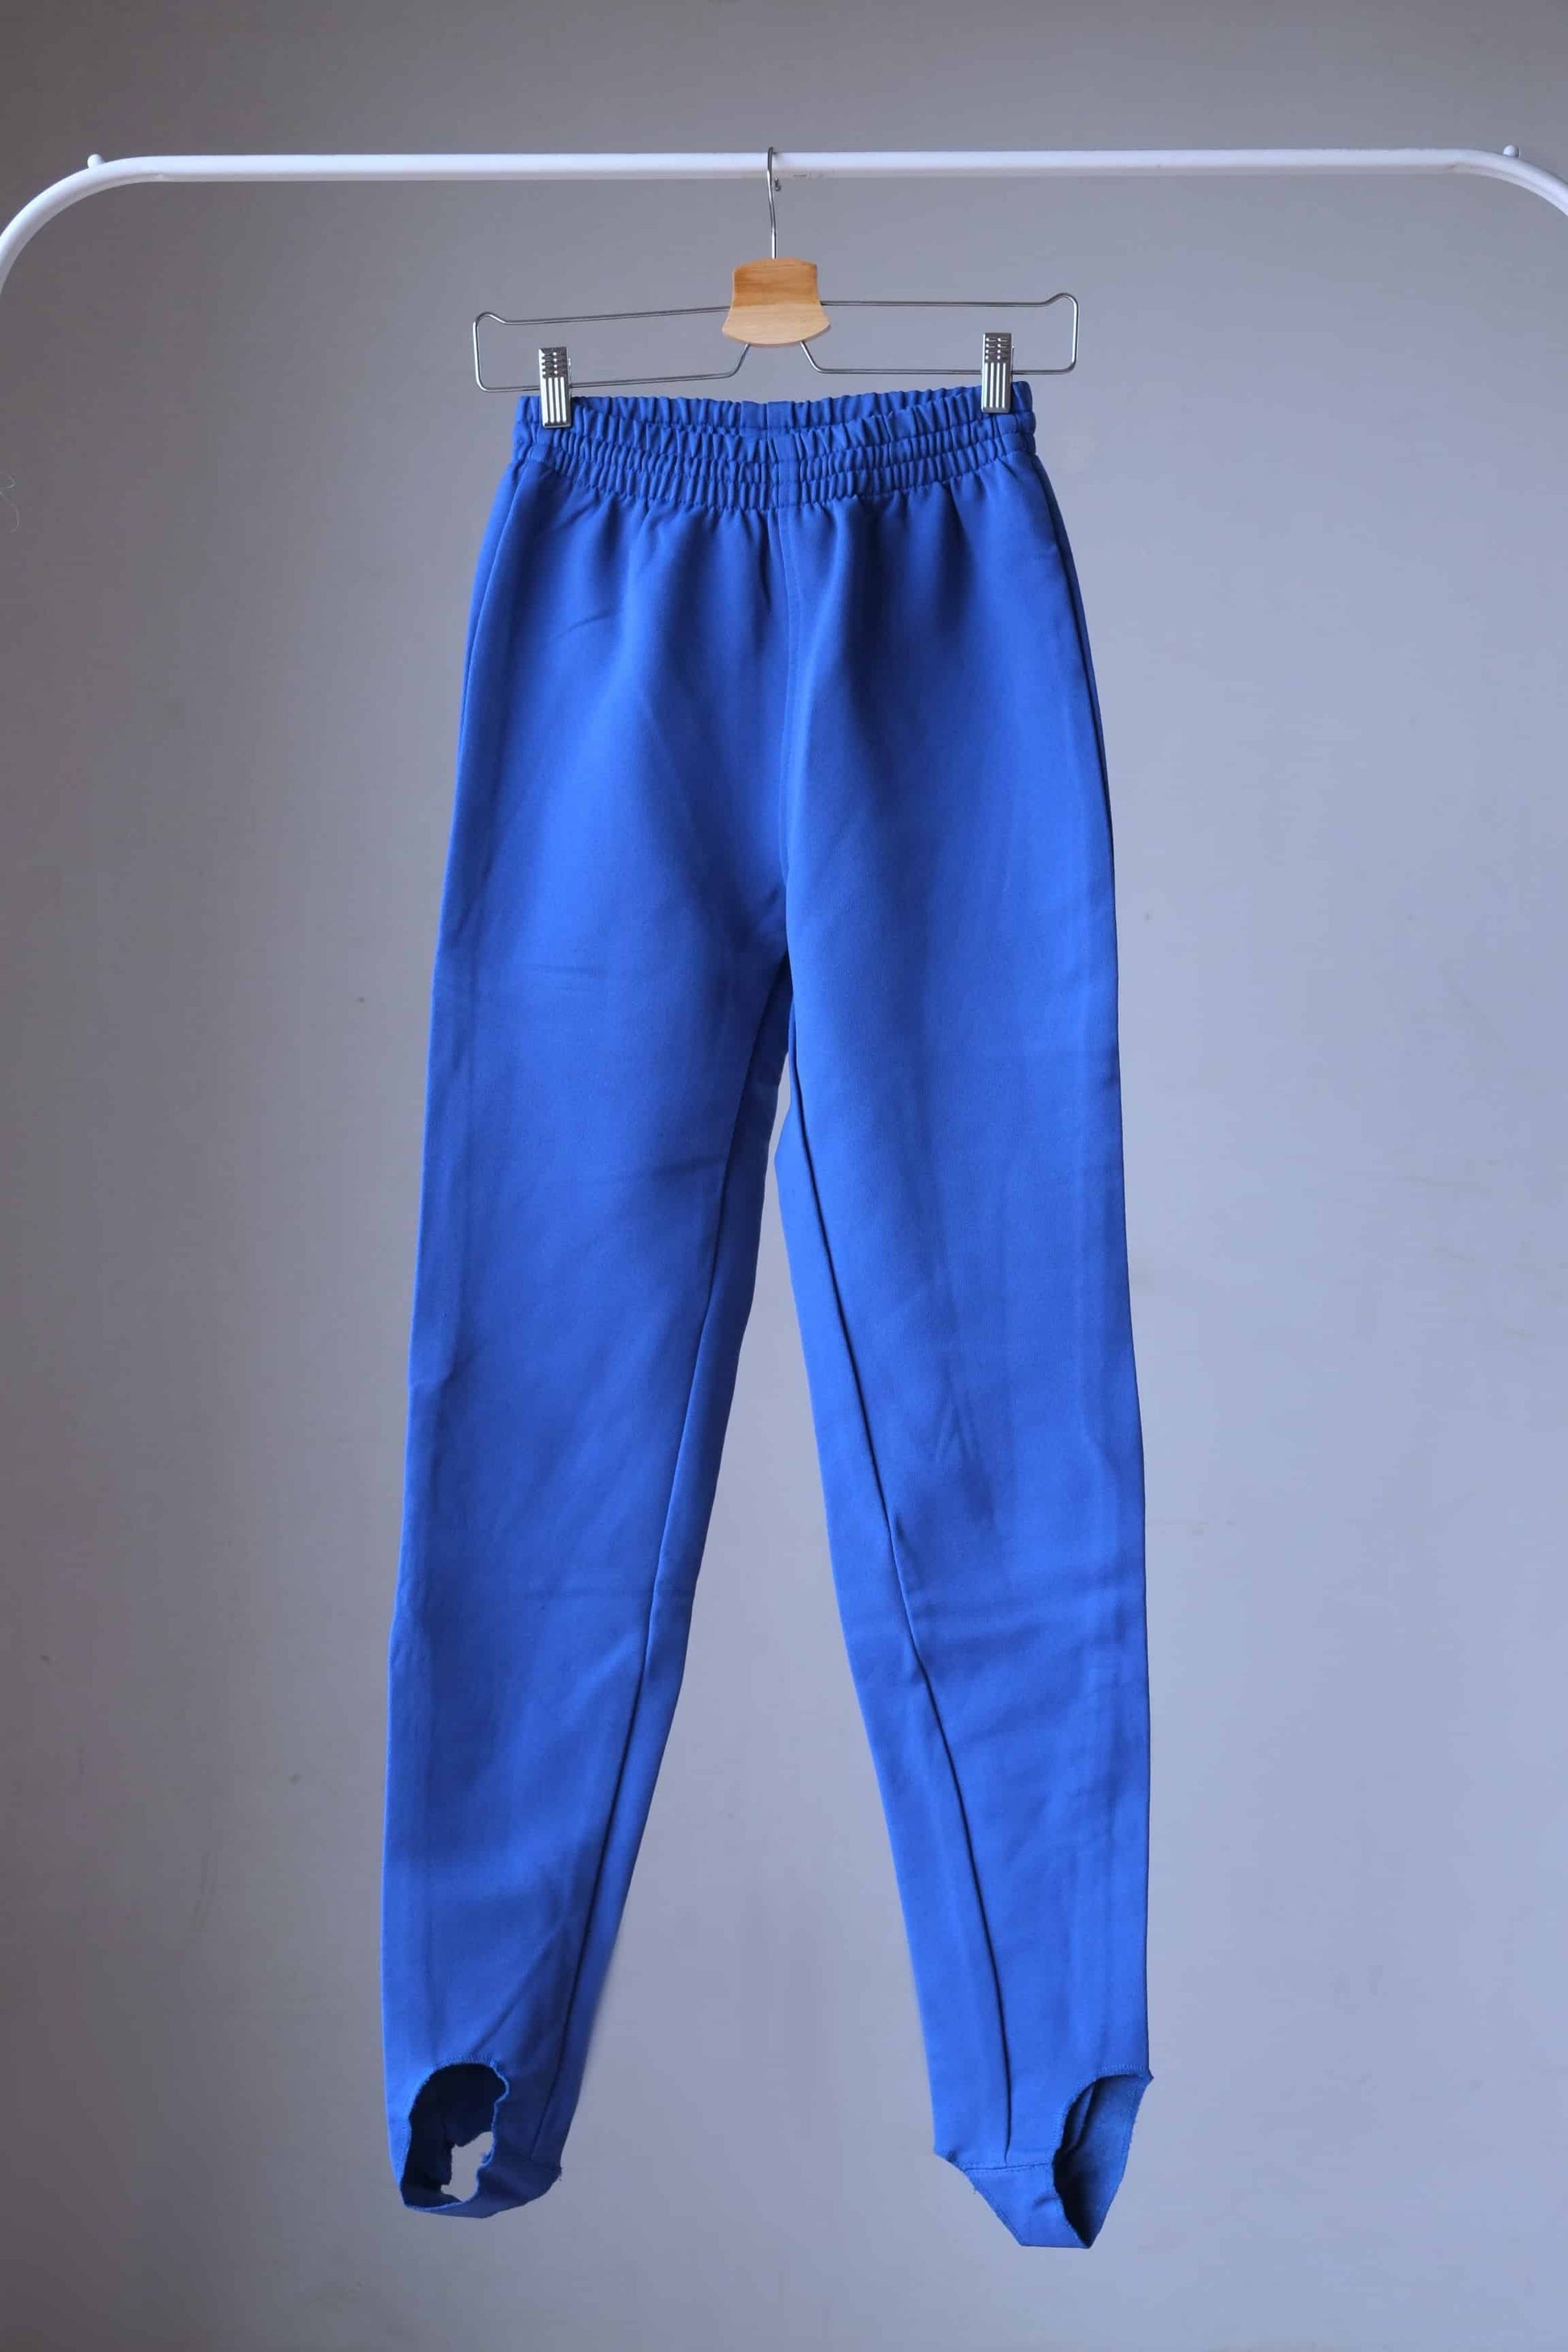 XS 70s Striped Stirrup Ski Pants Vintage Blue High Waisted Stretchy Winter Snow  Pants -  Canada